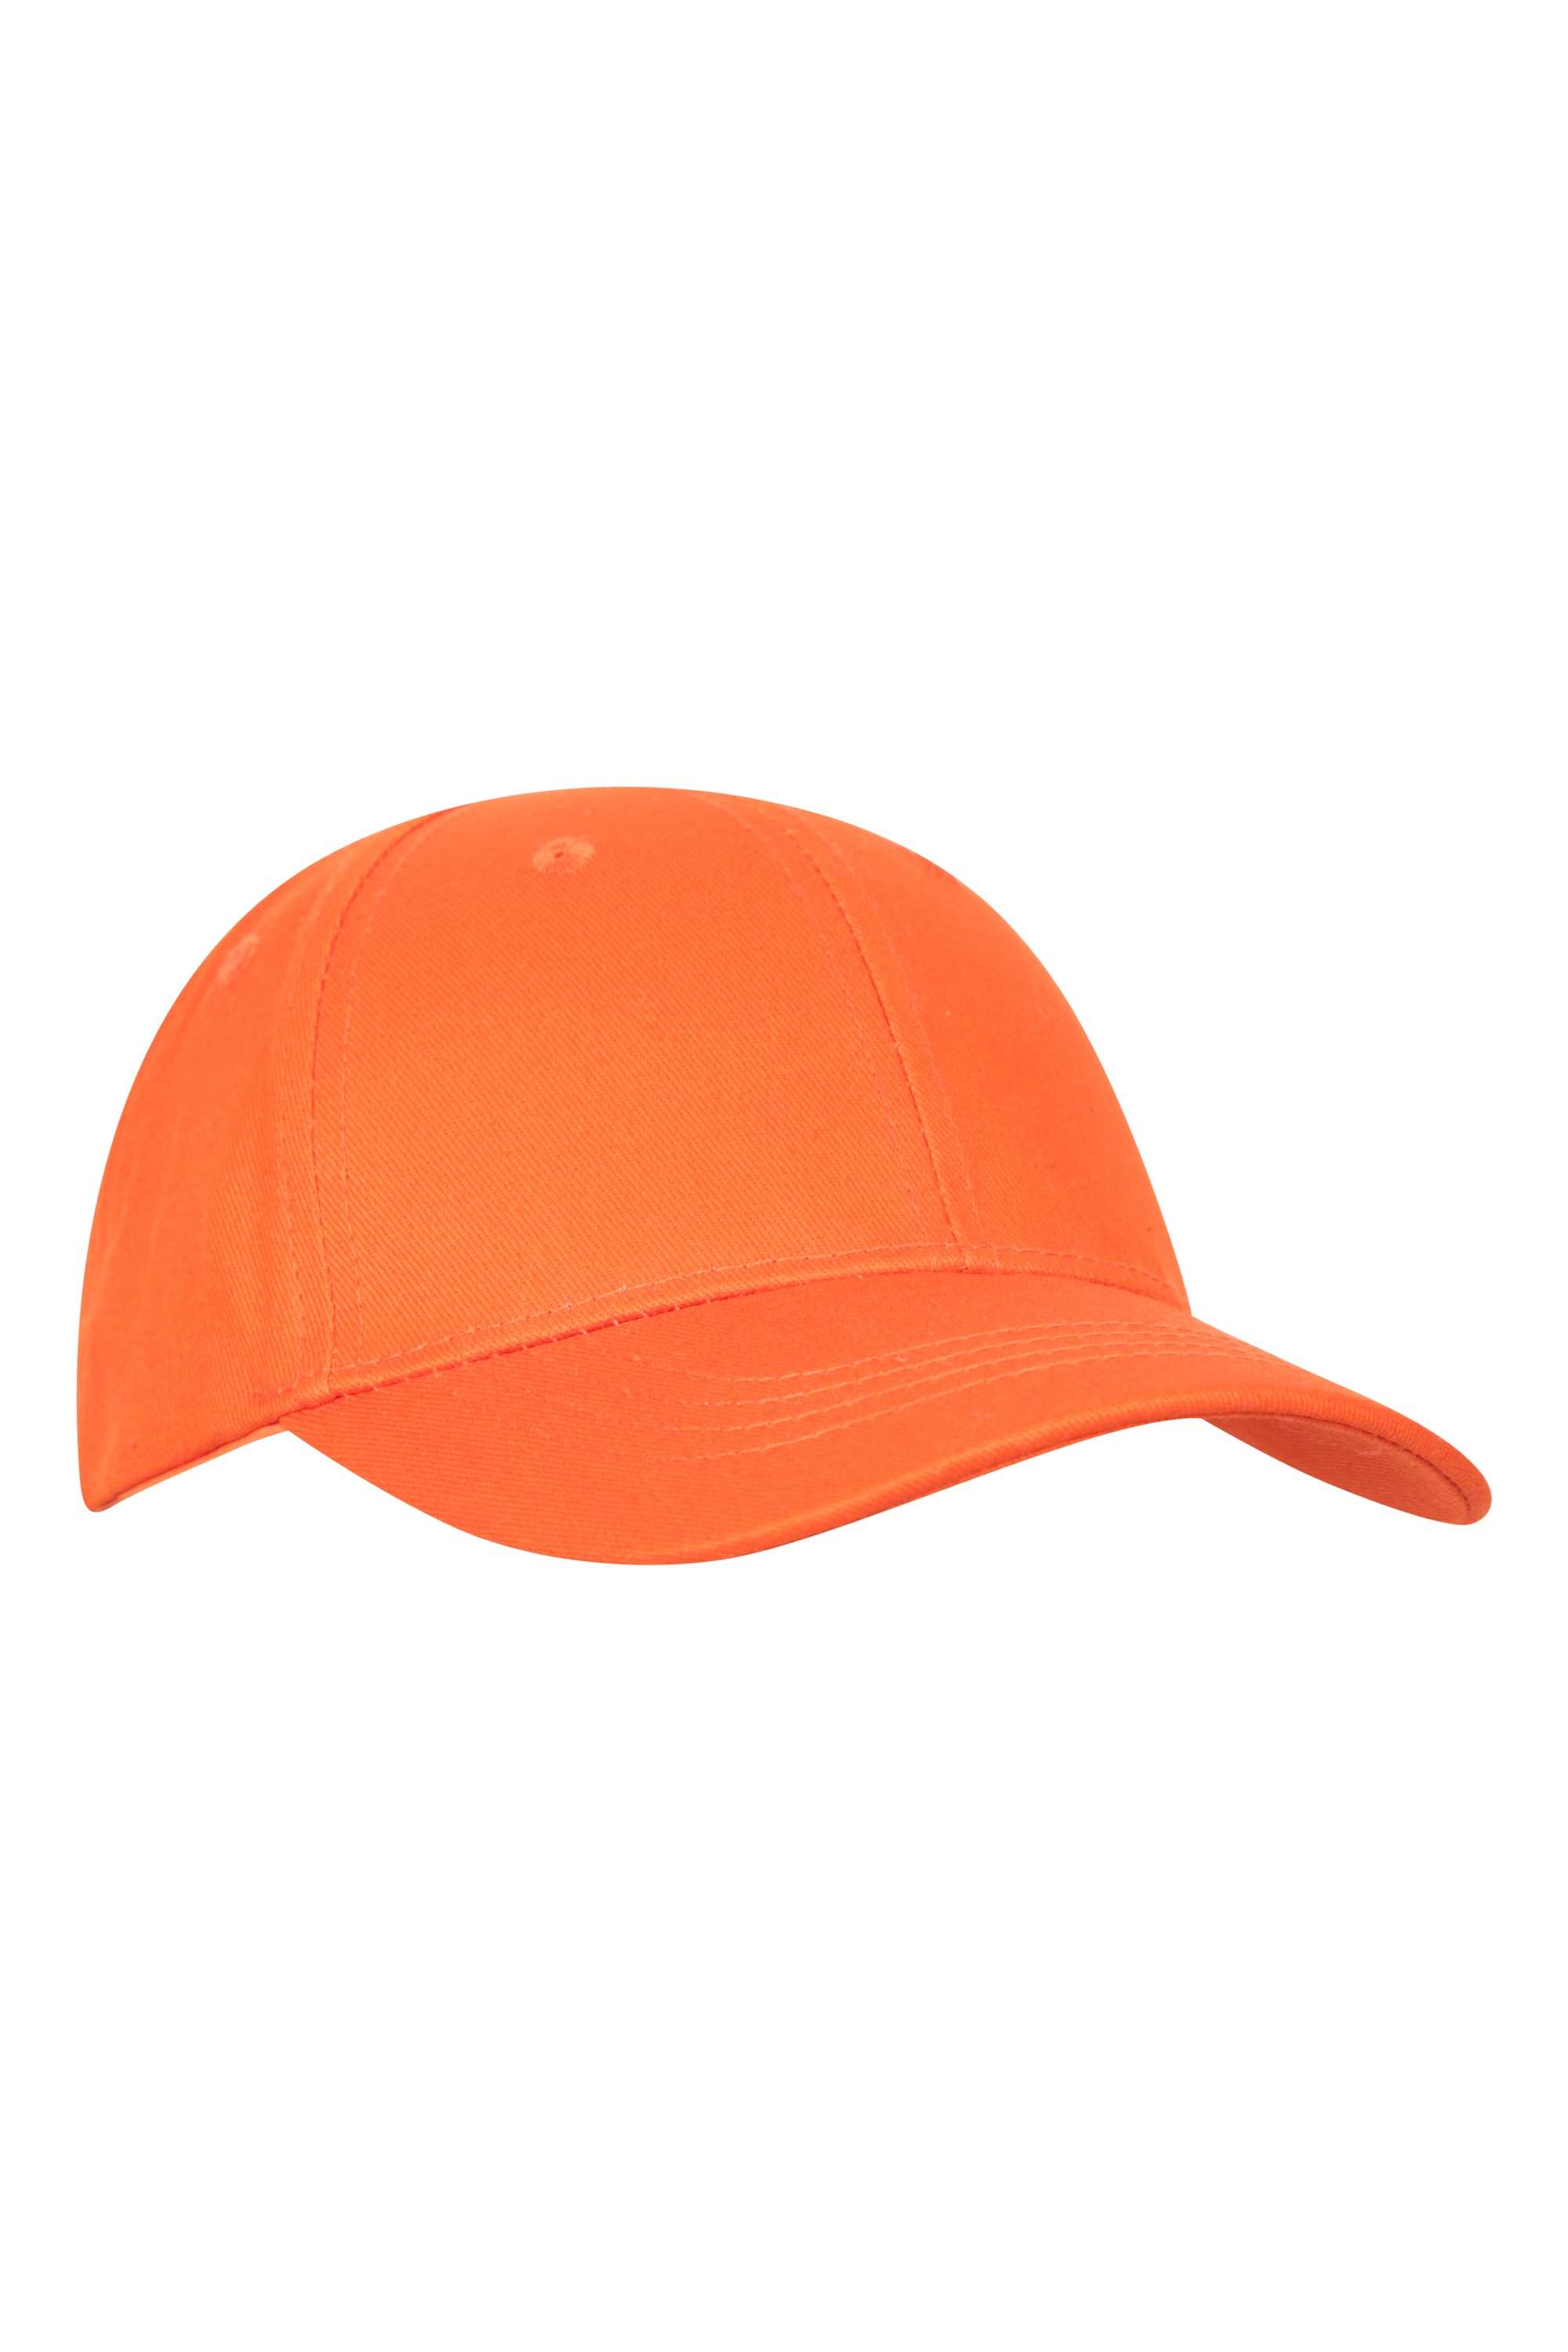 Kids Baseball Cap - Orange